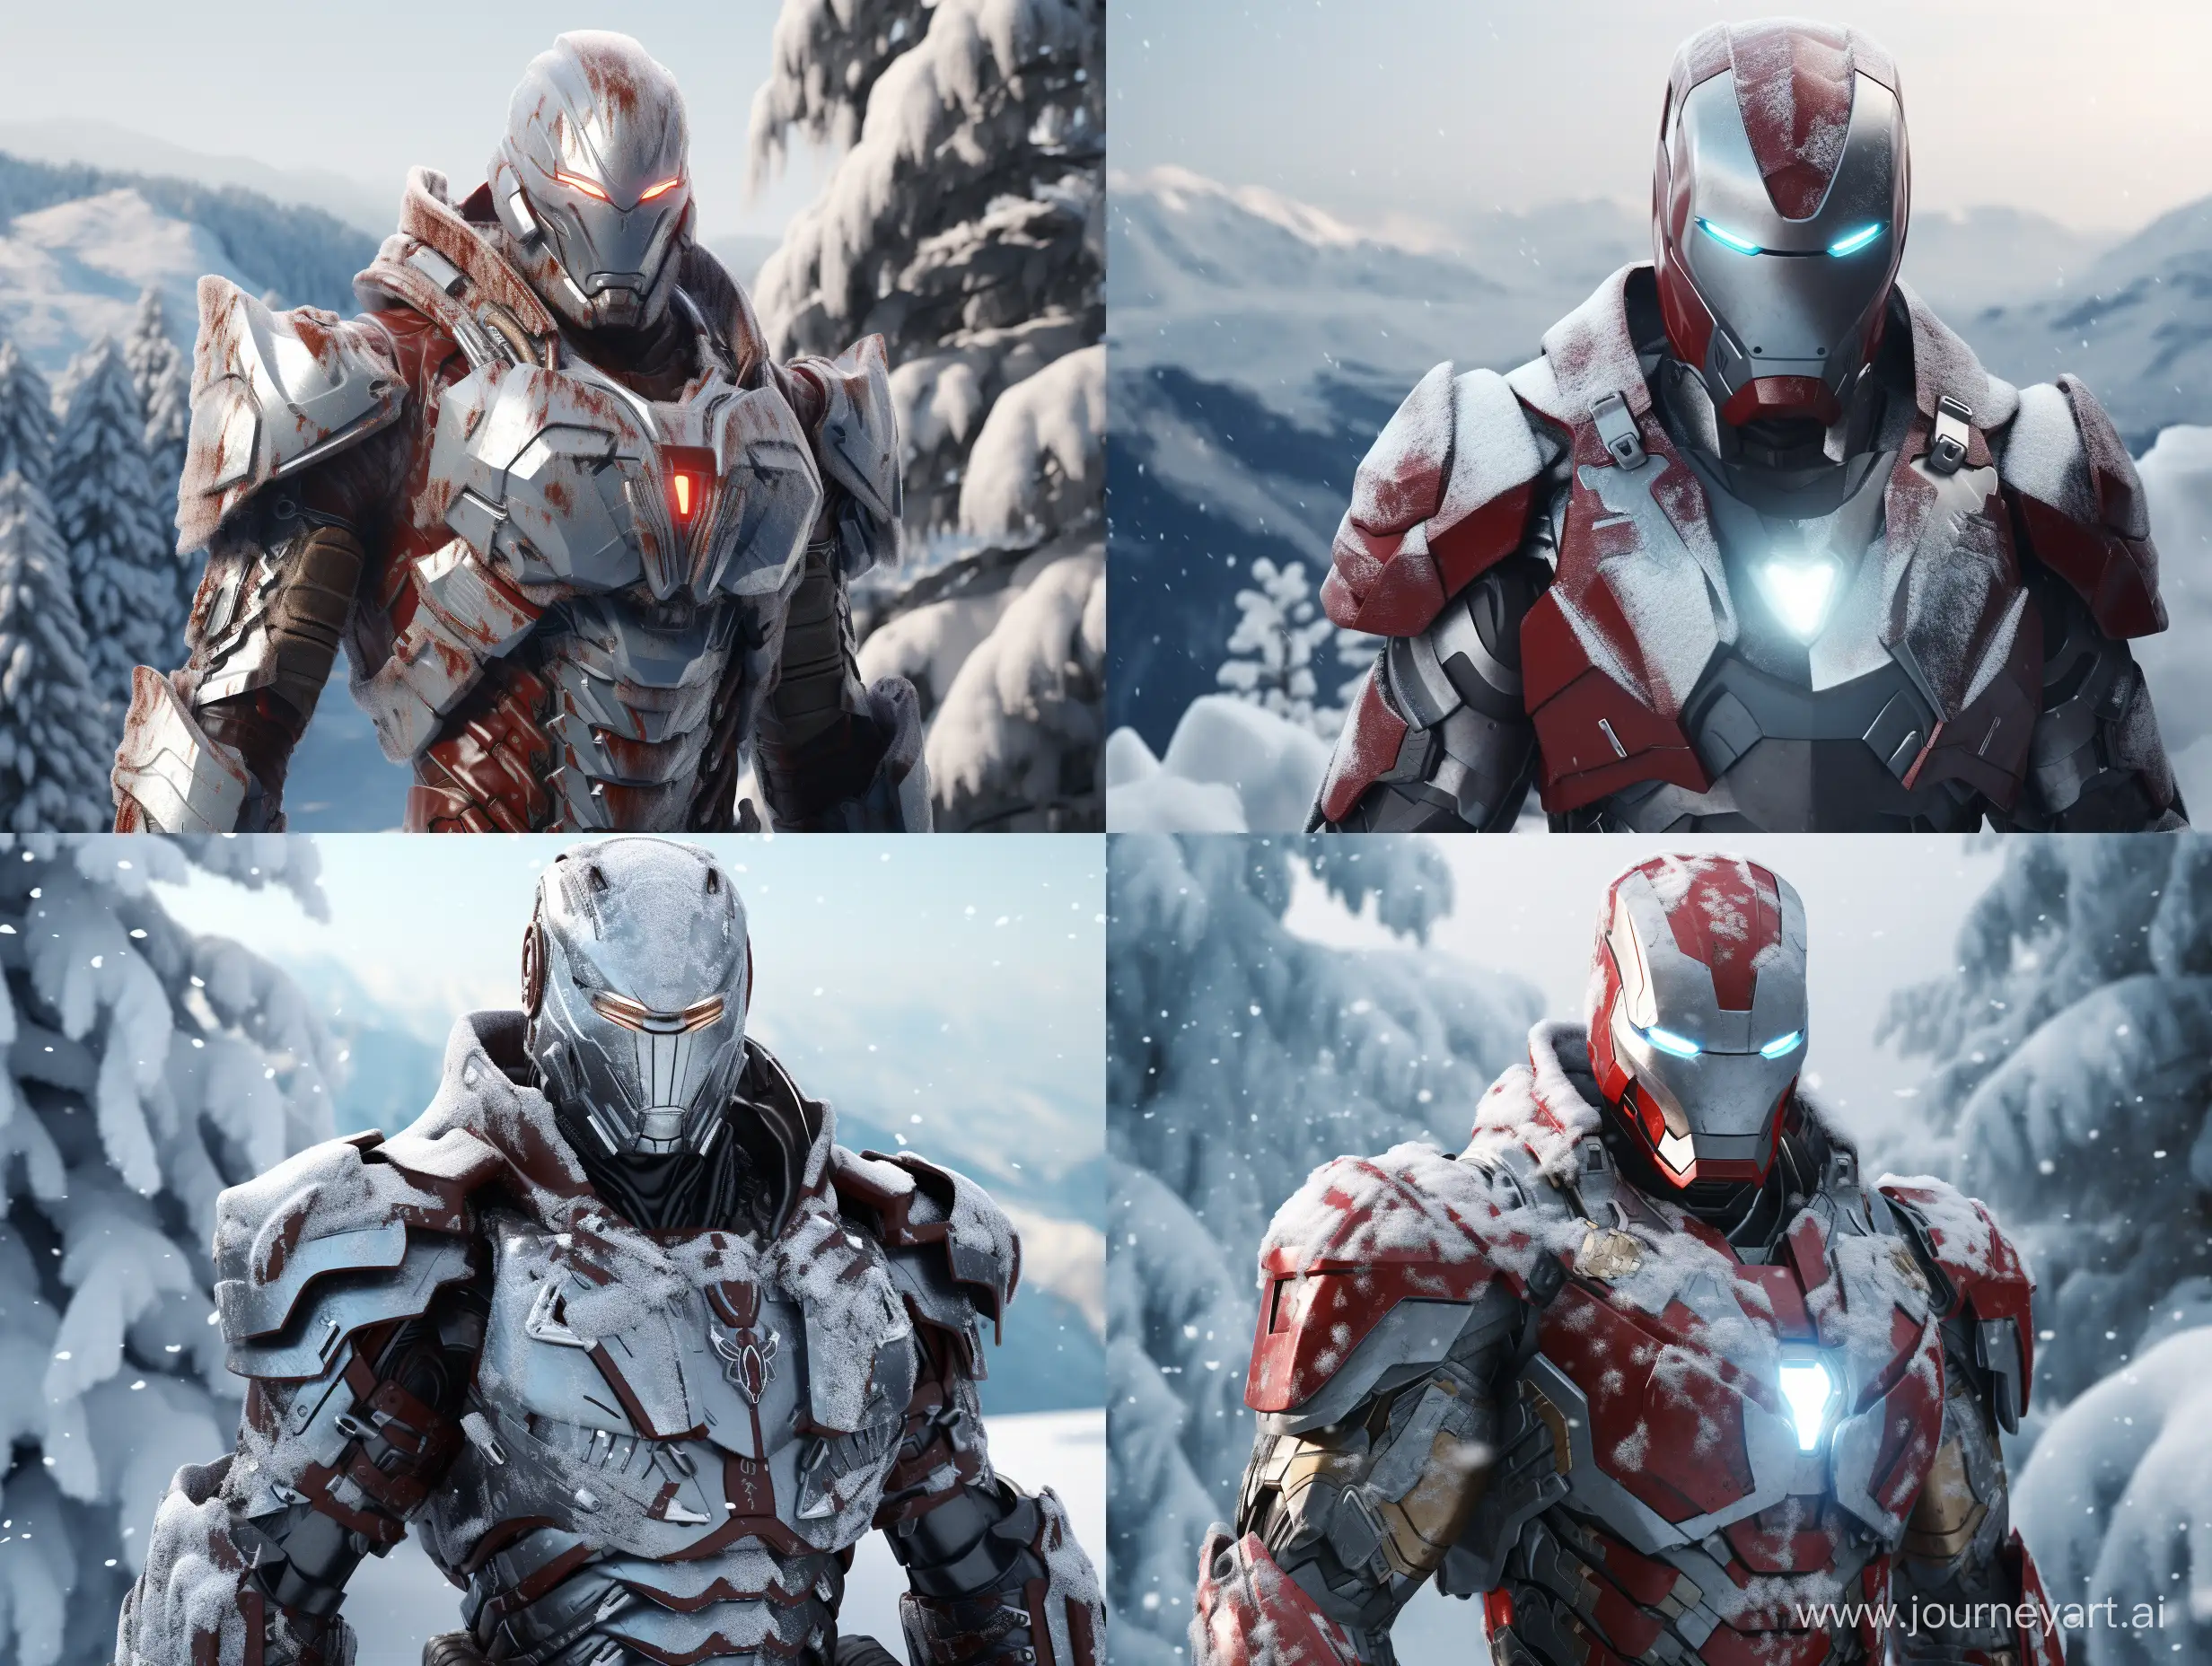 Iron-Man-Winter-Armor-8K-HighResolution-Suit-in-Snowy-Landscape